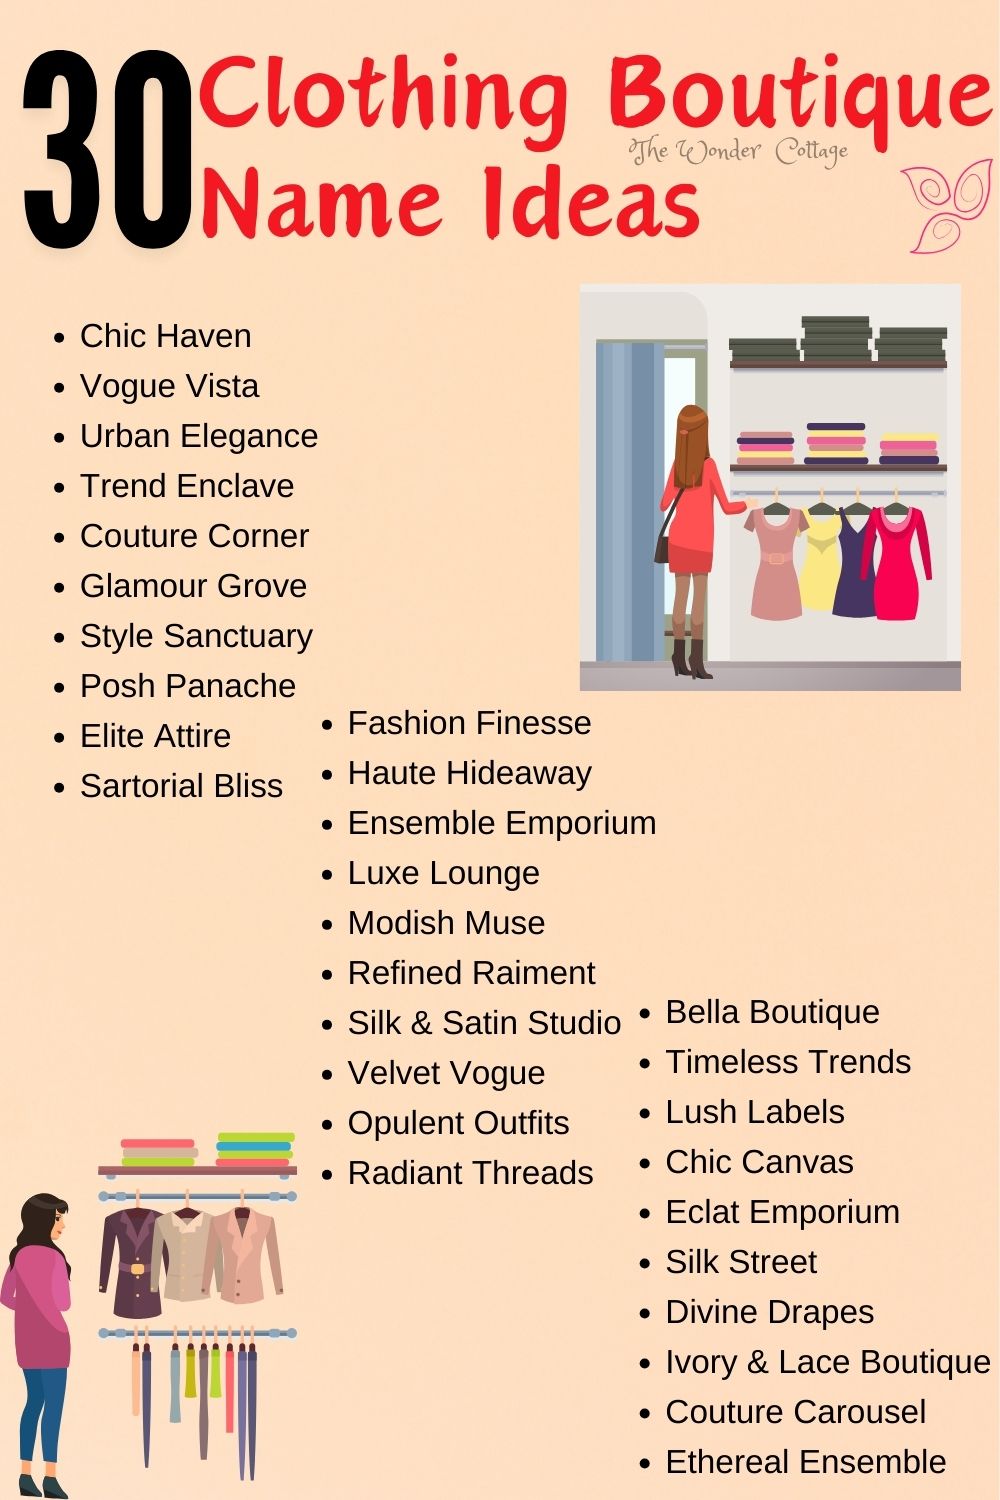 30 Clothing Boutique Name Ideas